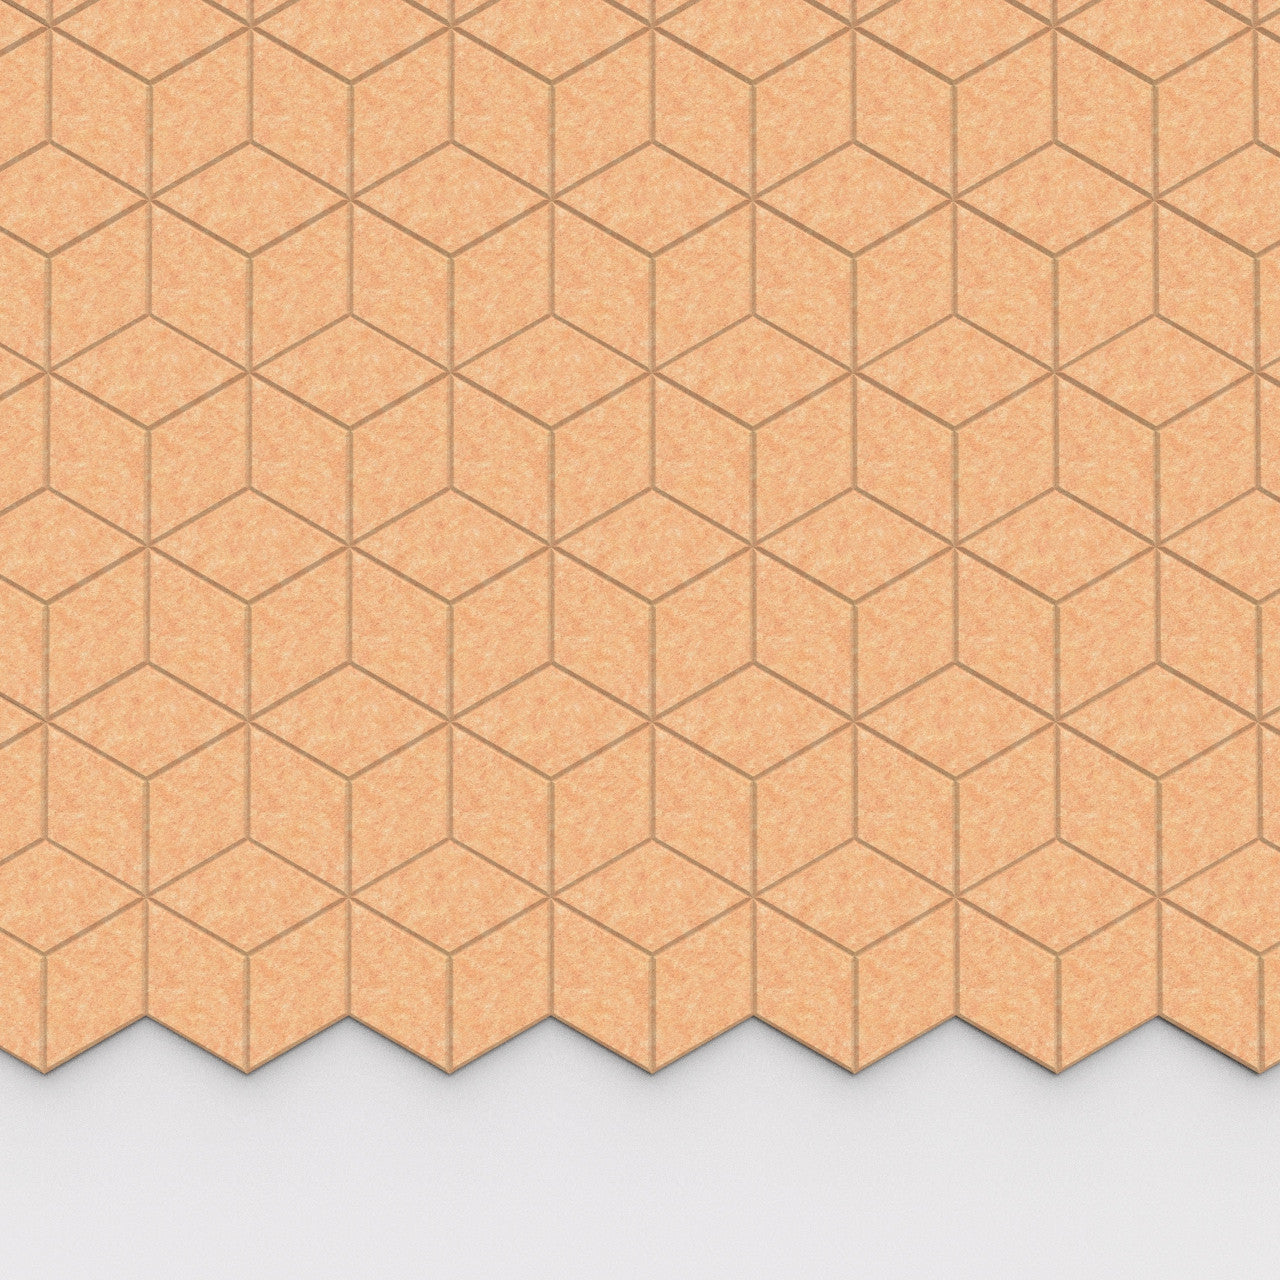 100% Recycled PET Felt Hexagon Diamond Small Acoustic Tile Camel | Plastock